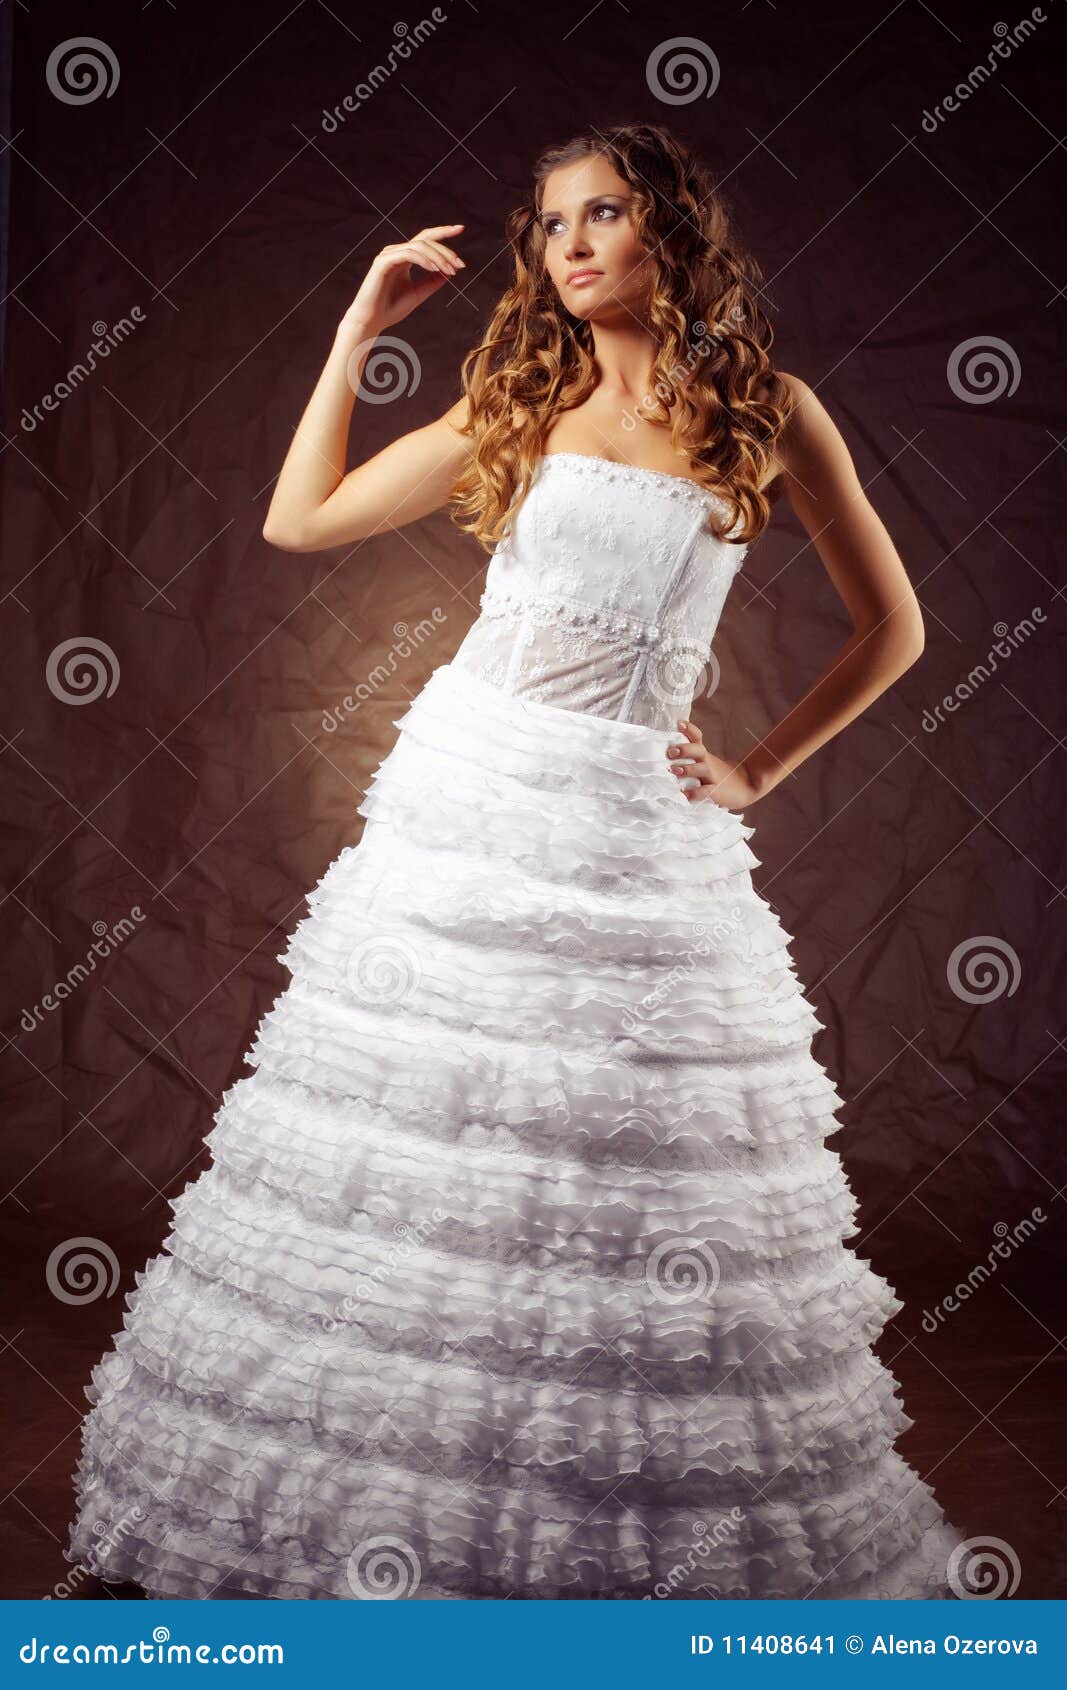 Wedding gown | Beautiful bridal dresses, Ball gowns wedding, Christian wedding  gowns